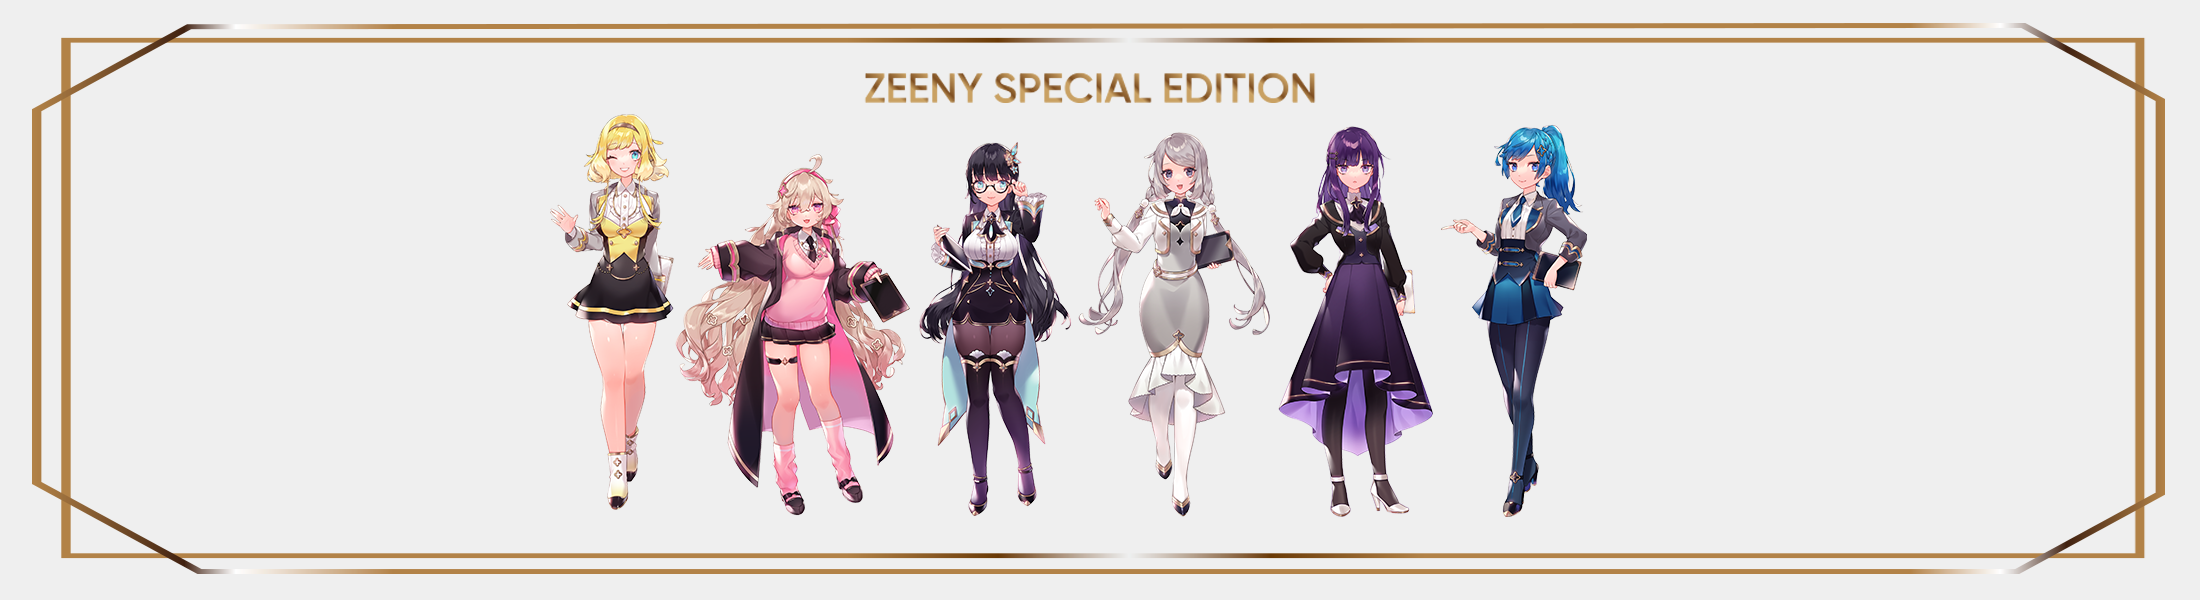 Zeeny Special Edition タグ Na16hd